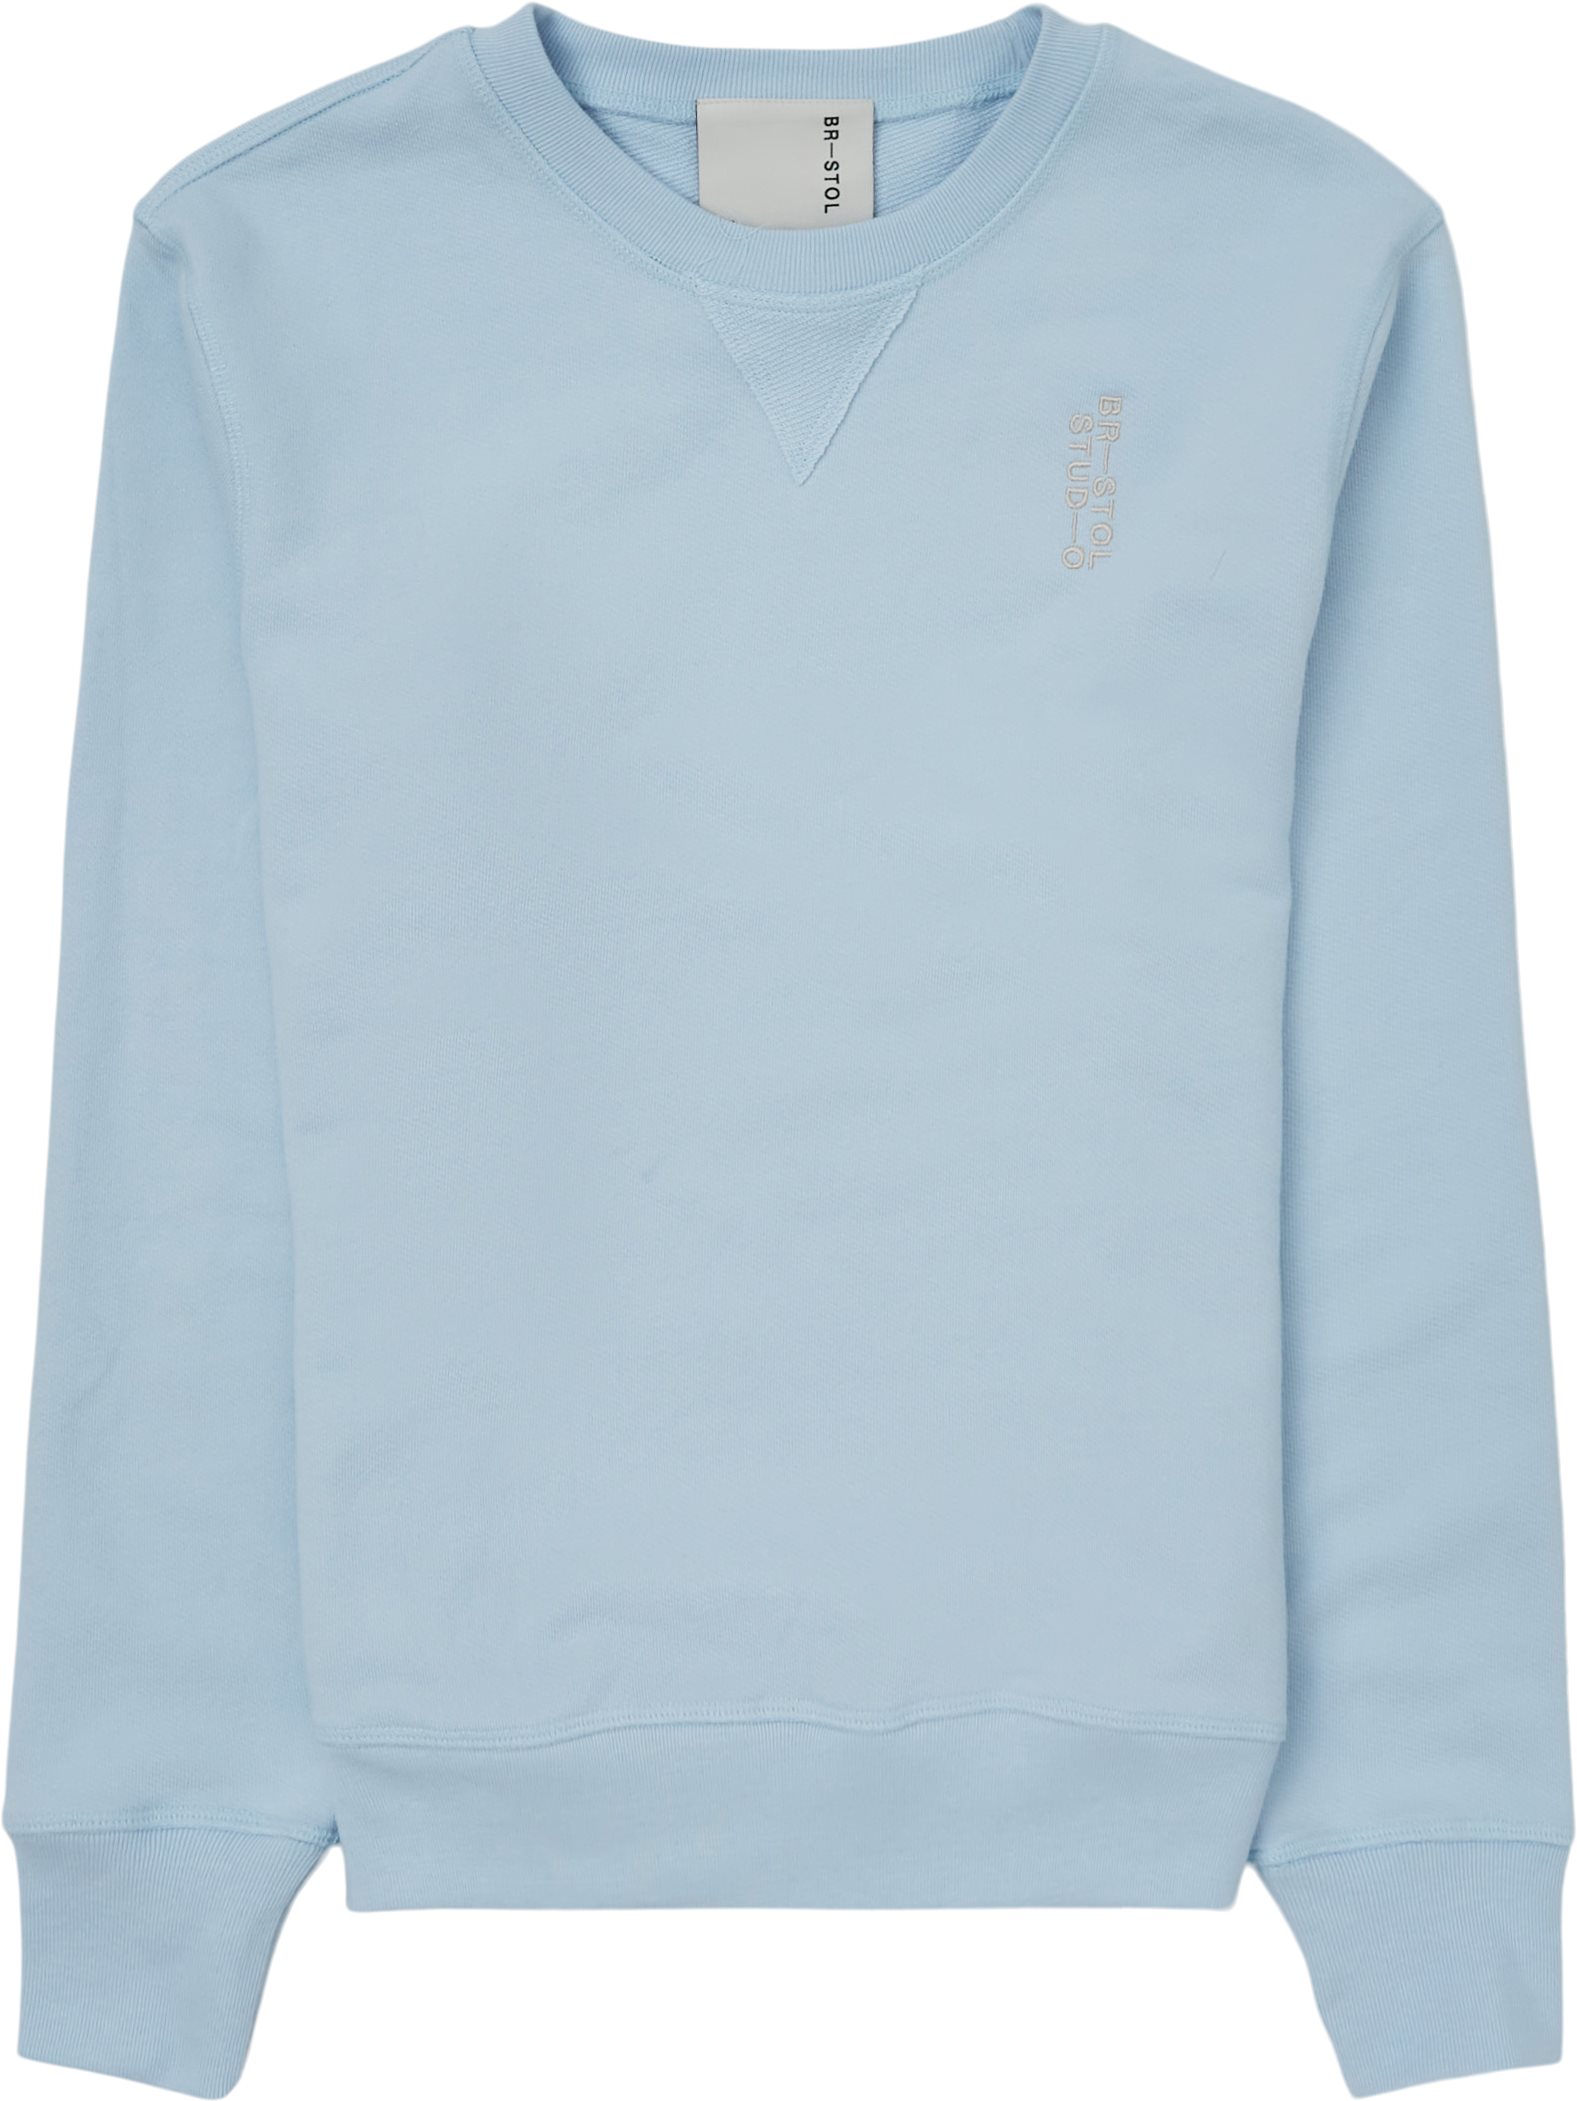 Bristol Studio Sweatshirts SIGNATURE CREWNECK Blue